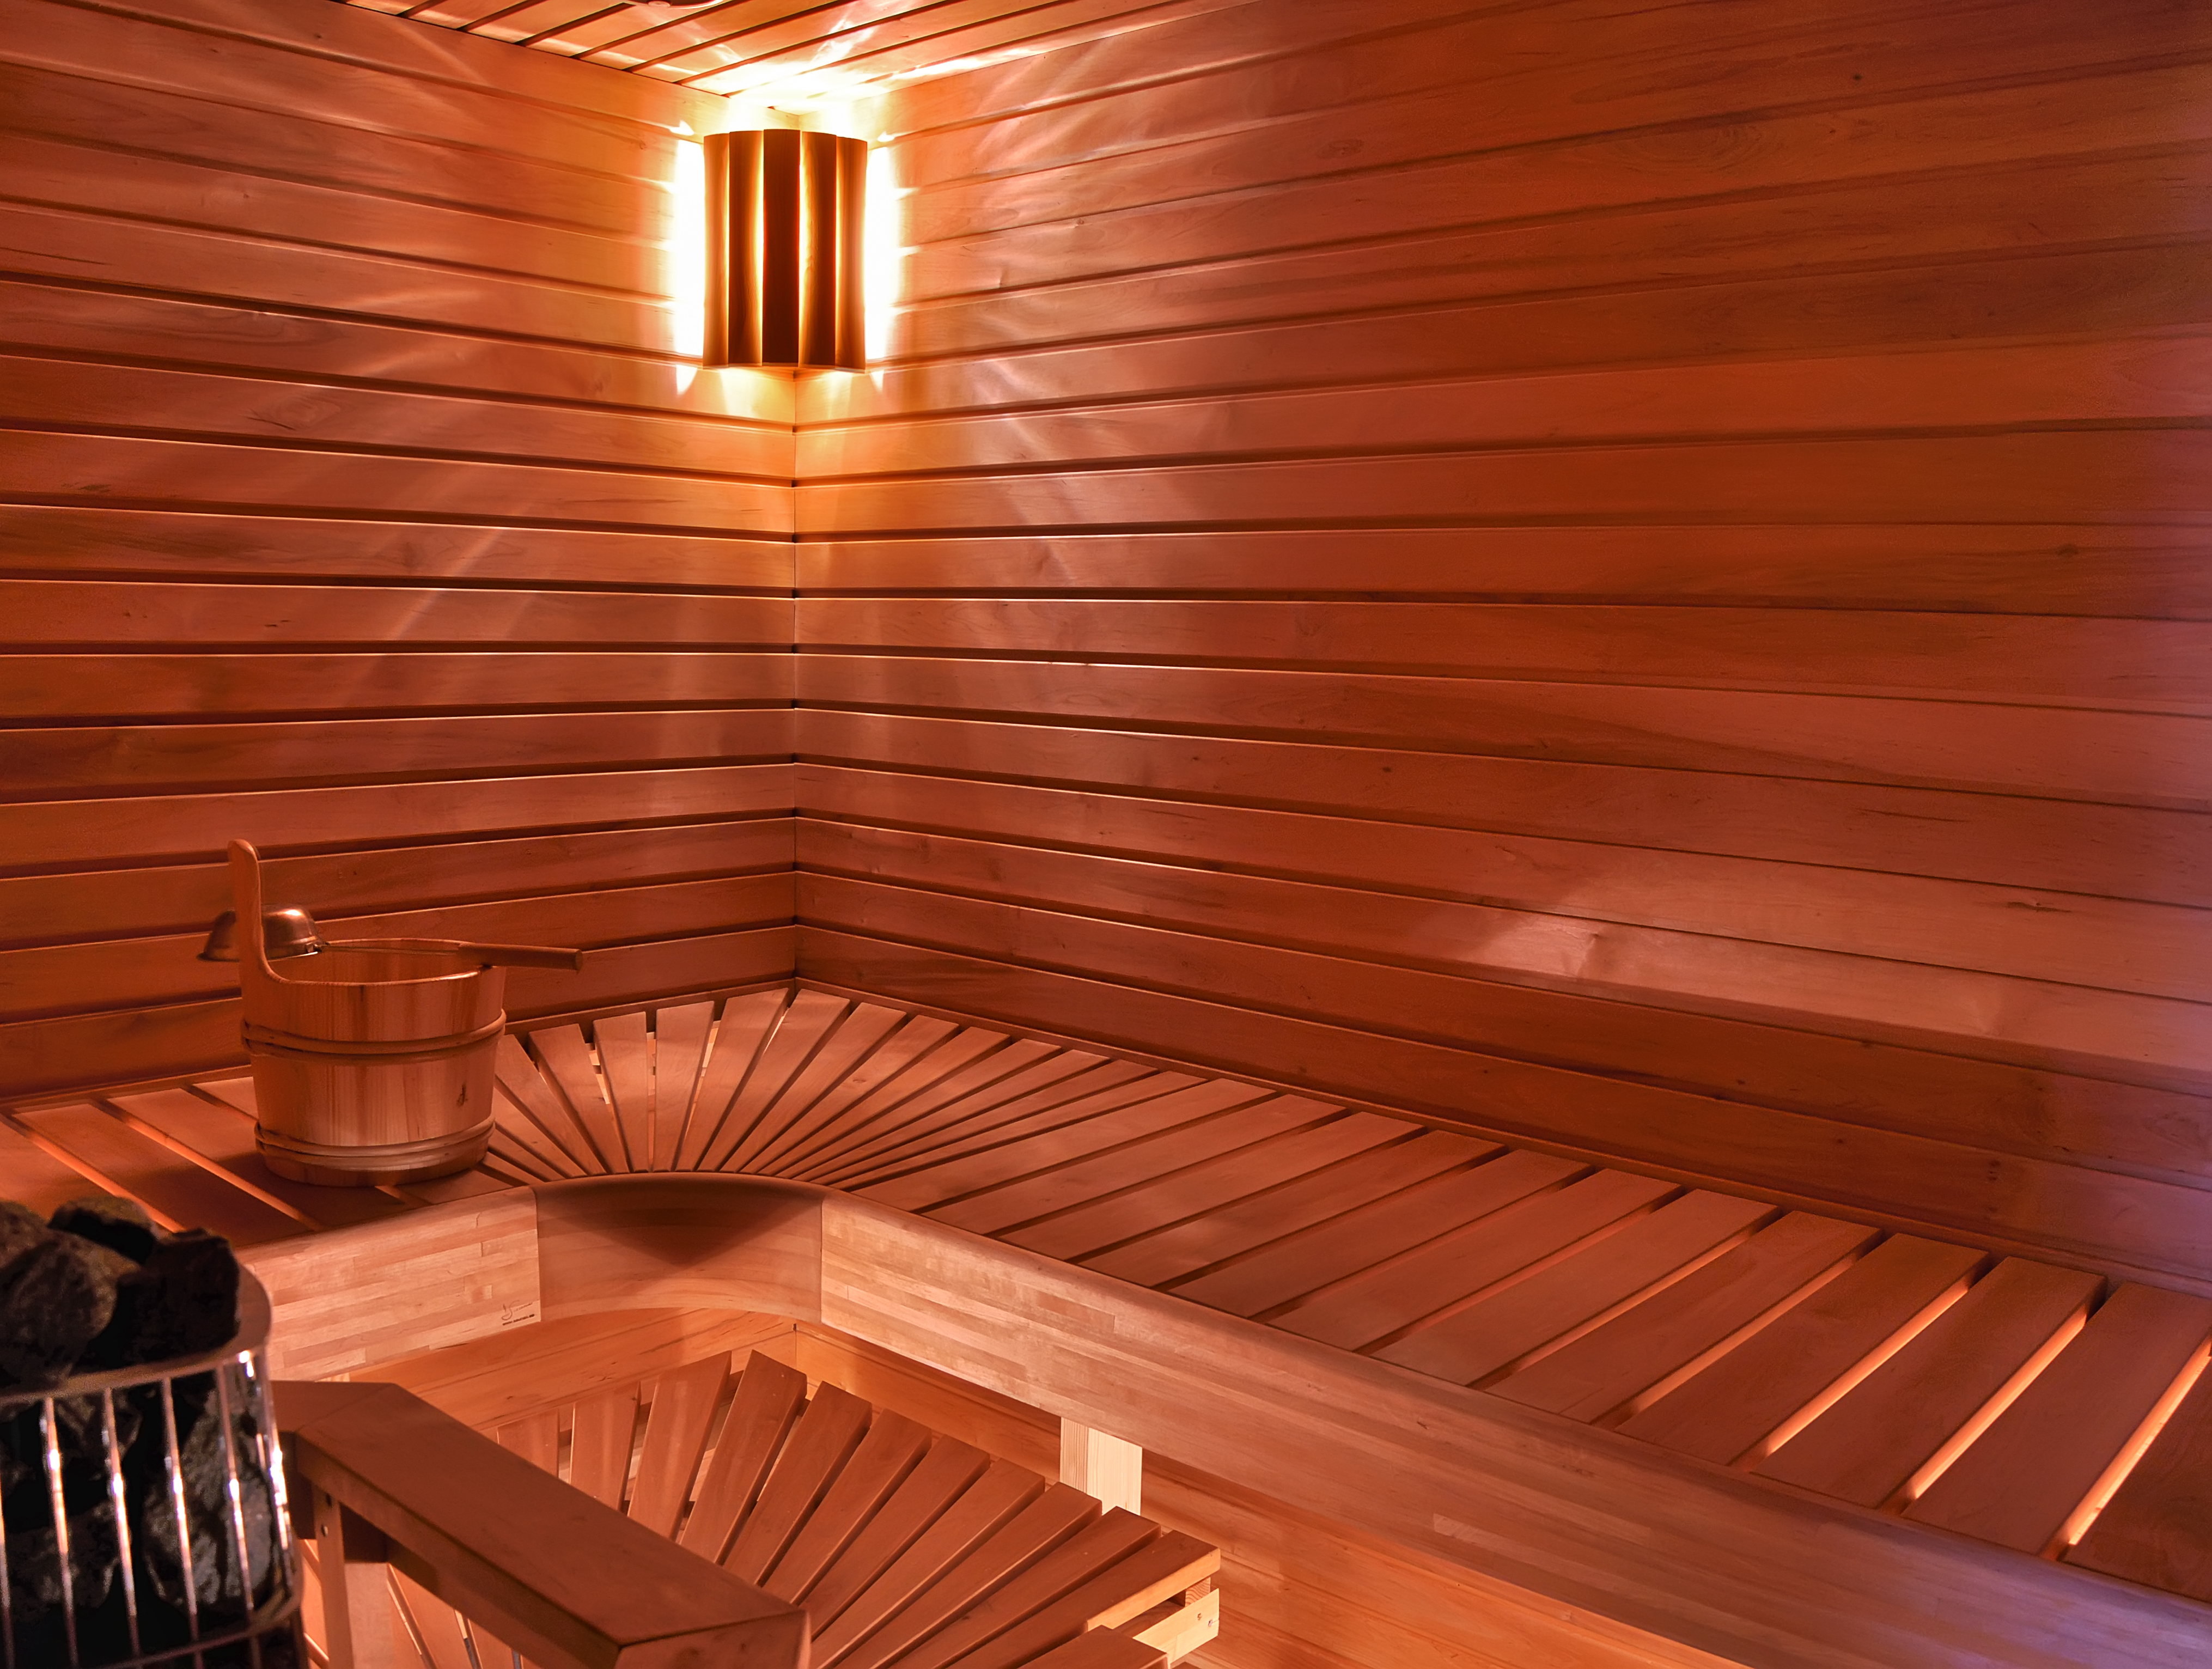 Top 10 Sauna Safety Tips